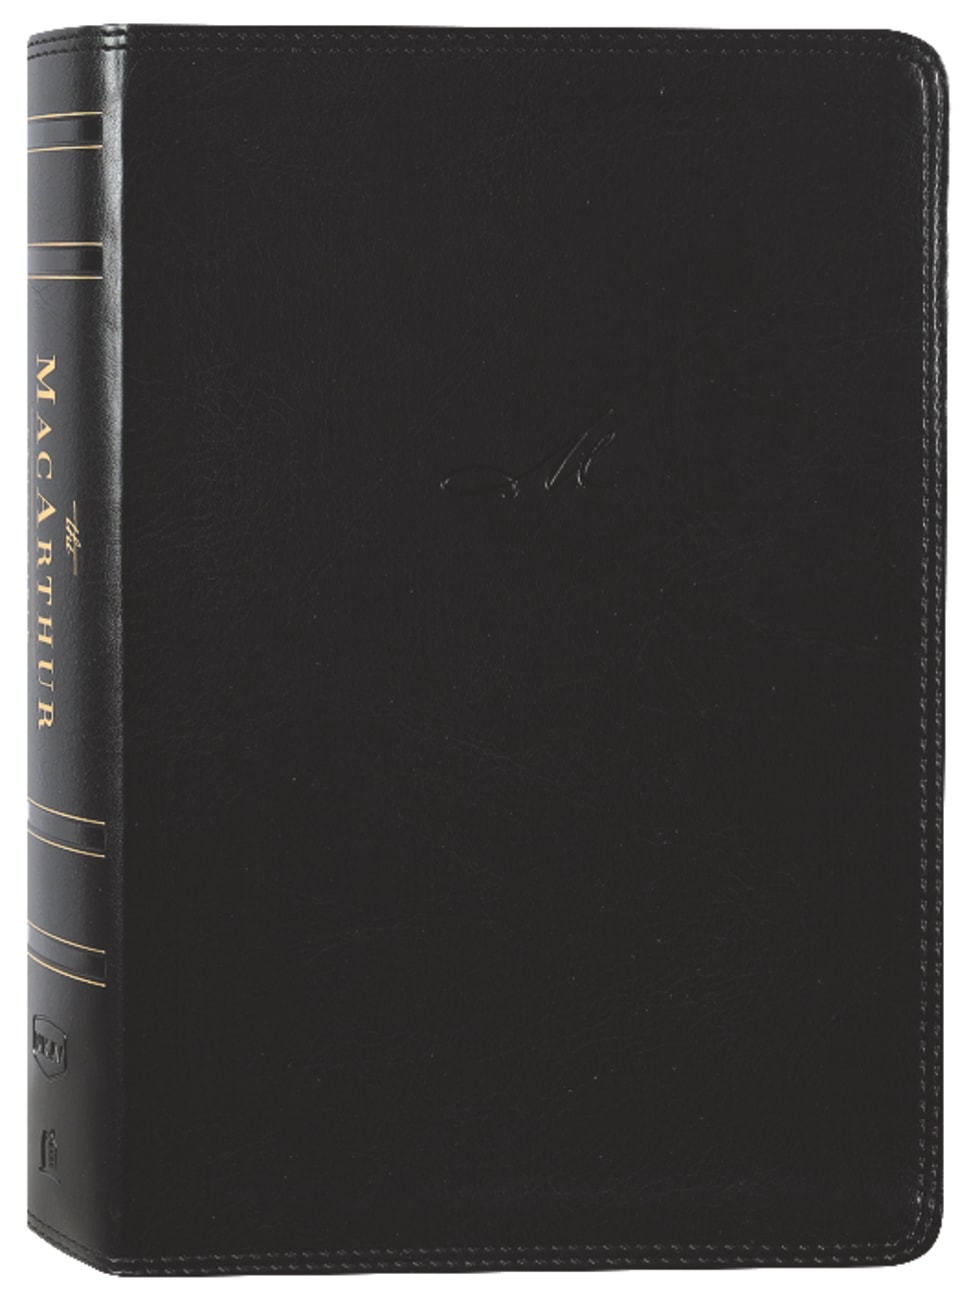 NKJV Macarthur Study Bible Black (2nd Edition) Premium Imitation Leather